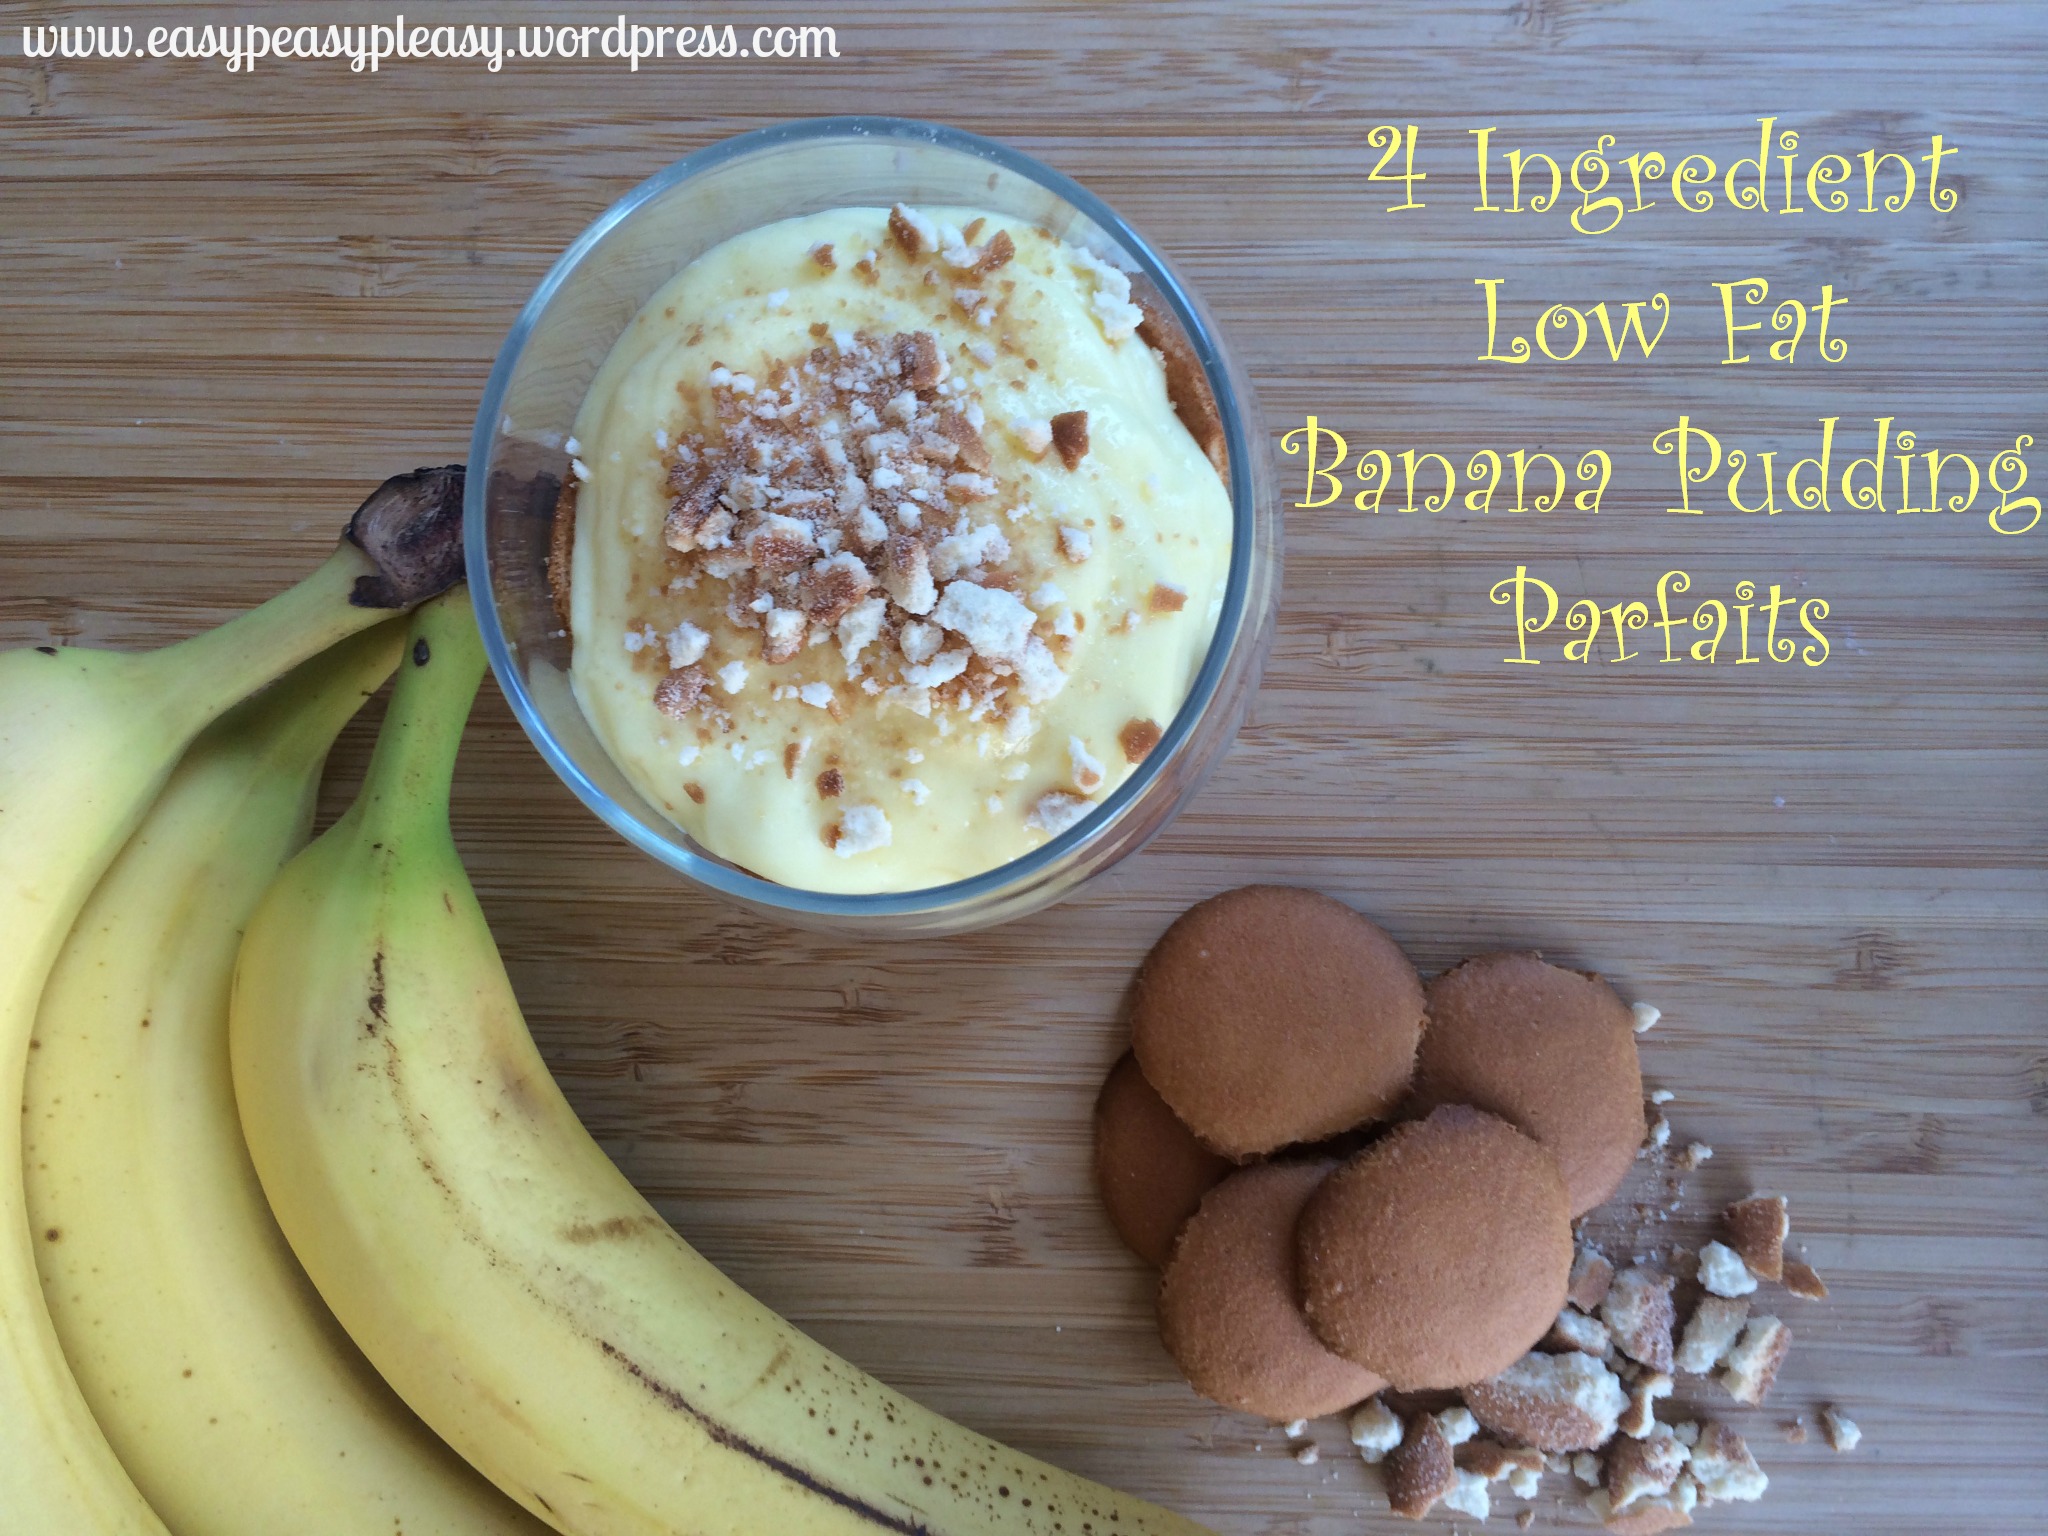 4 Ingredient Low Fat Banana Pudding Parfaits